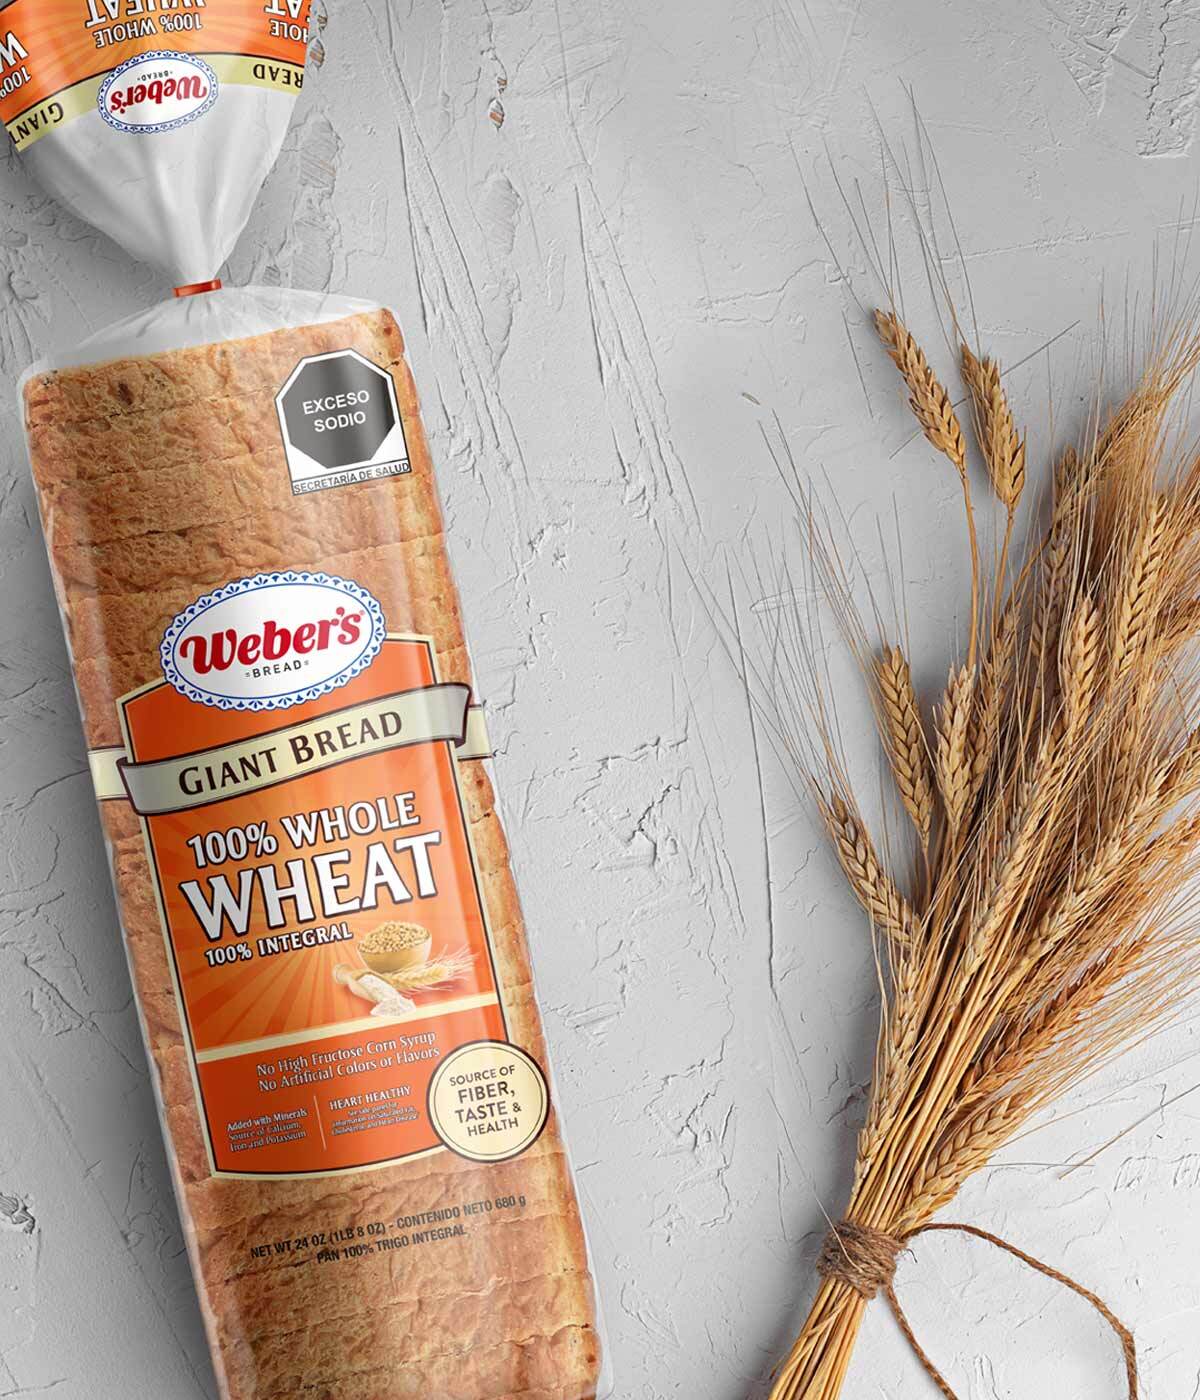 Imaginity, Weber´s, Giant Bread, Whole, Wheat Bread, Packaging Design